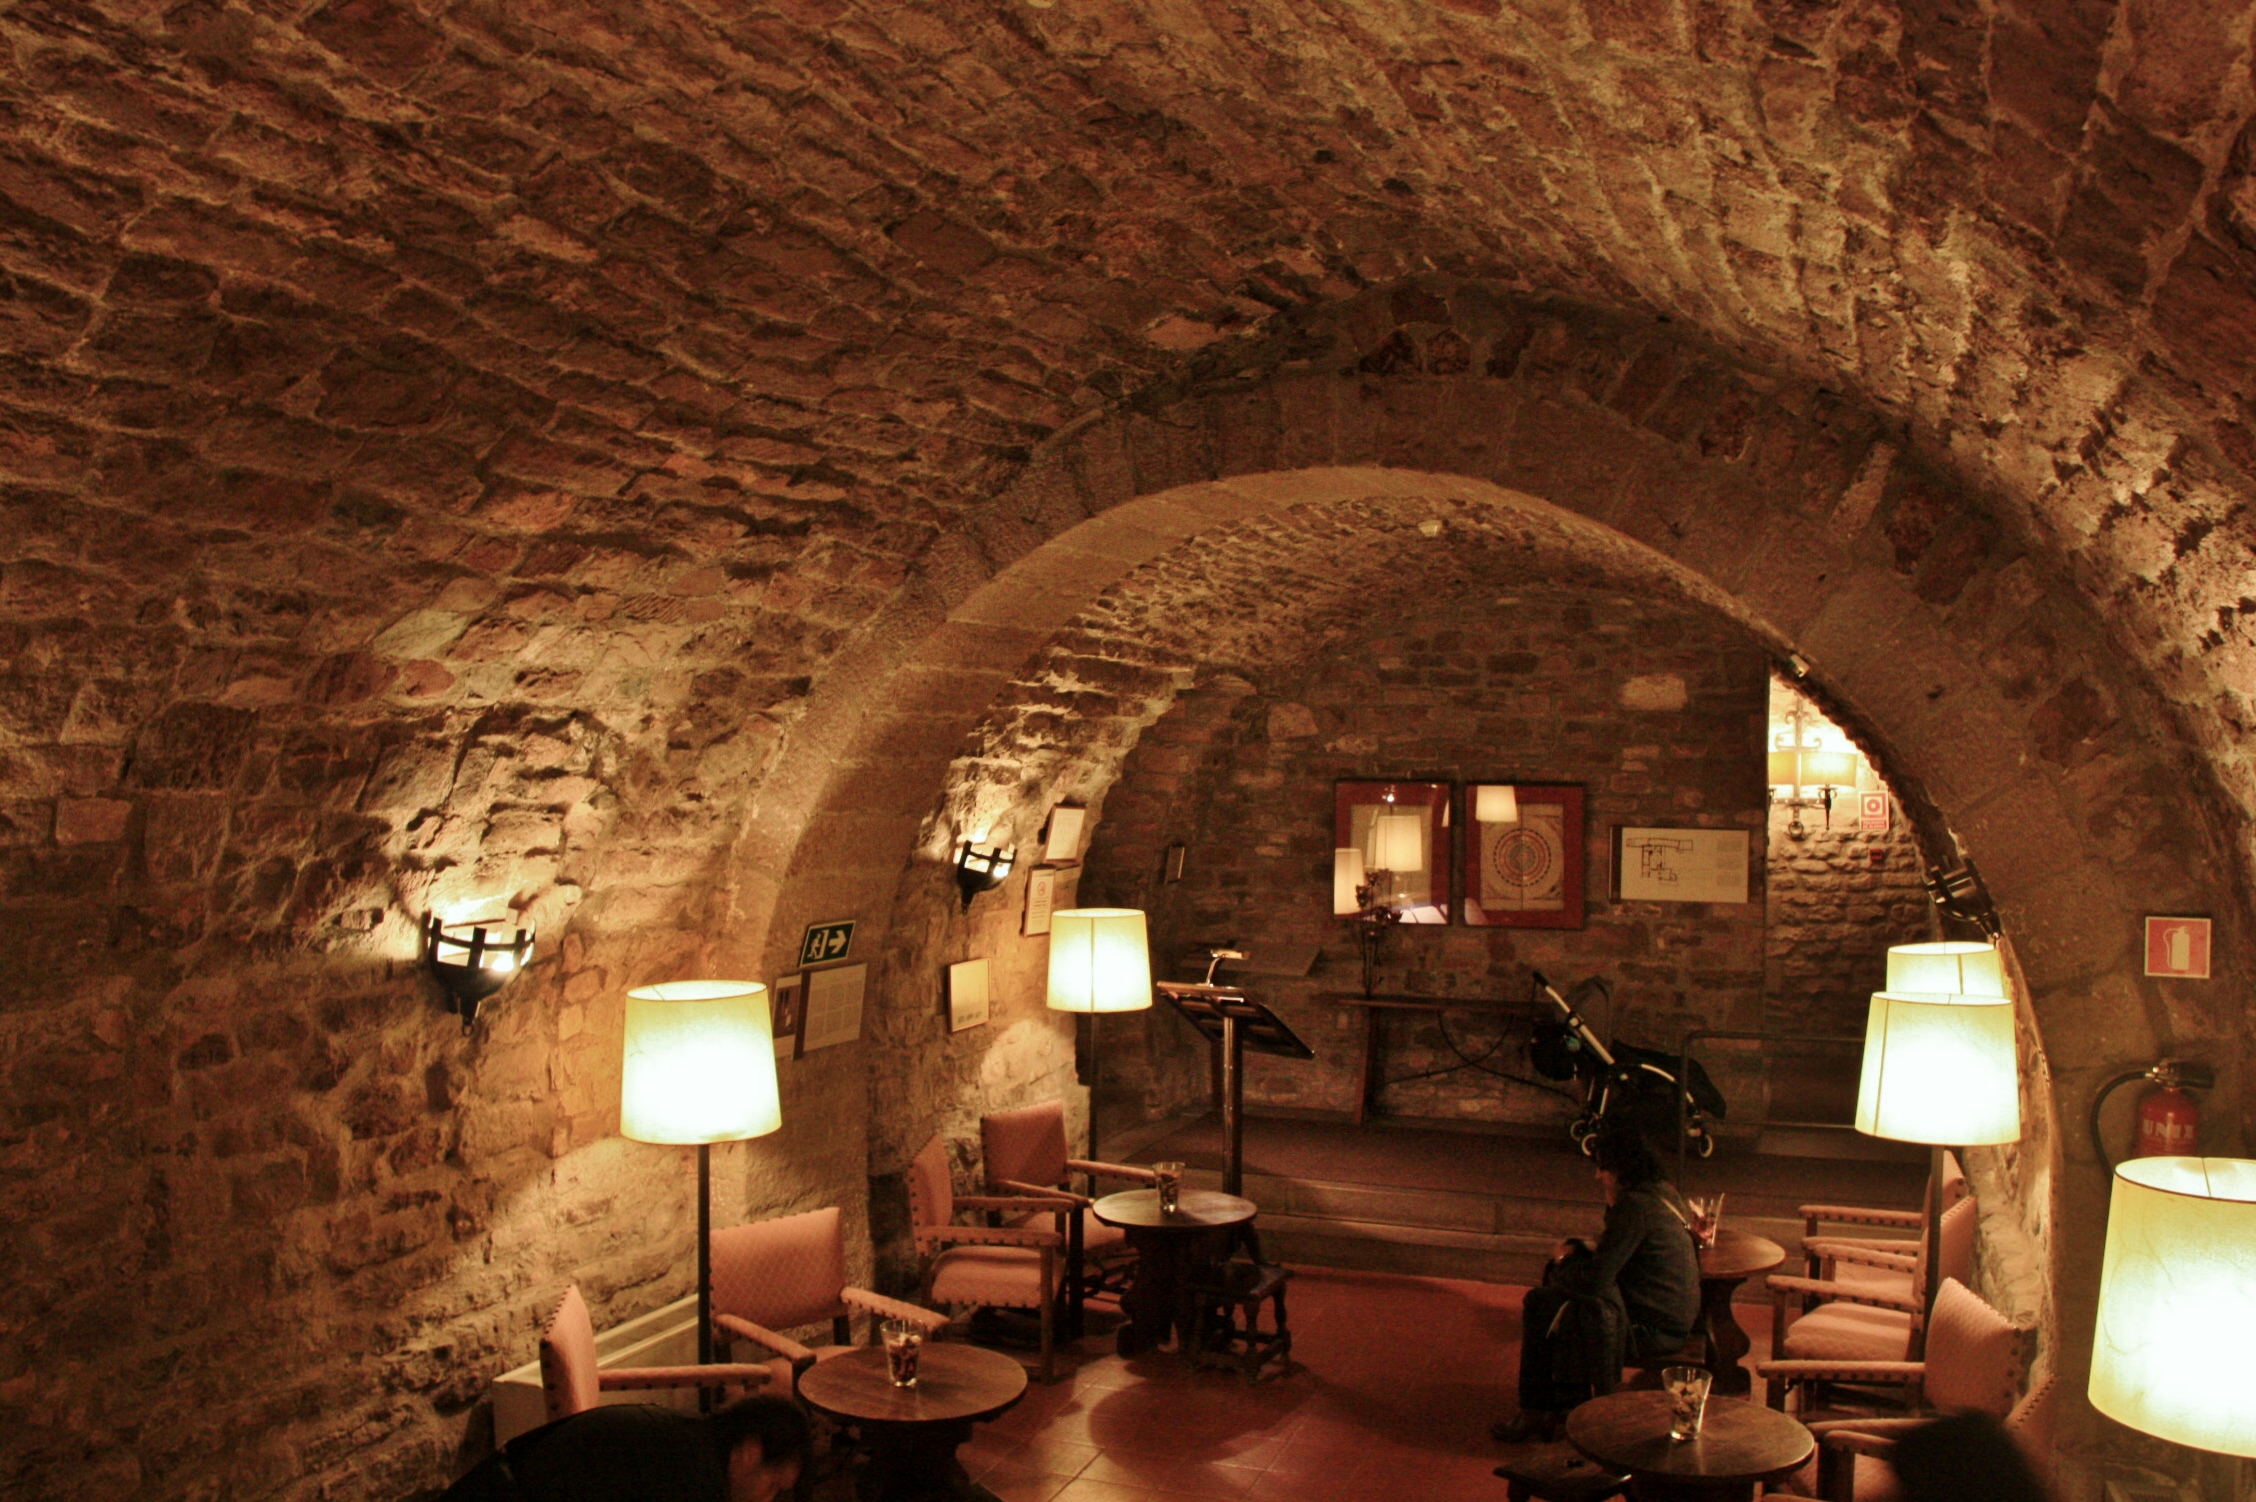 Foto: Interior del castillo - Cardona (Barcelona), España